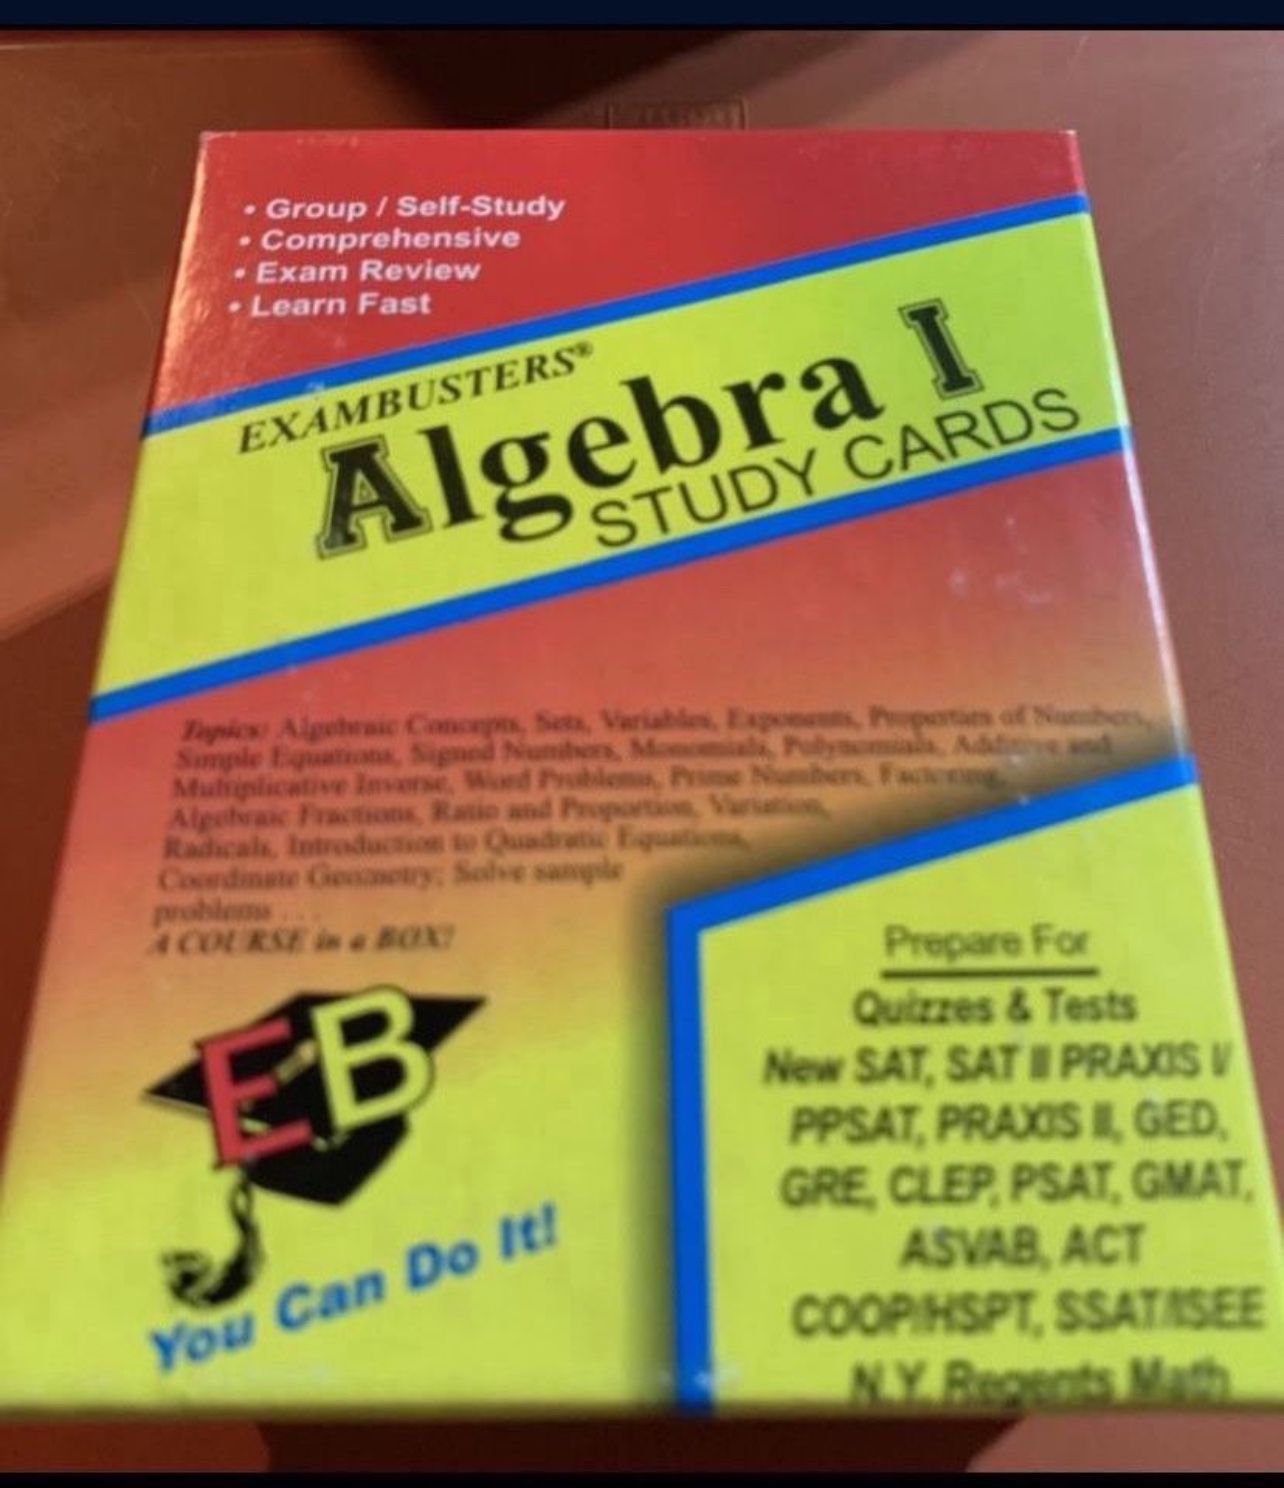 Exam busters Algebra 1 Course Flash/StudyCards 